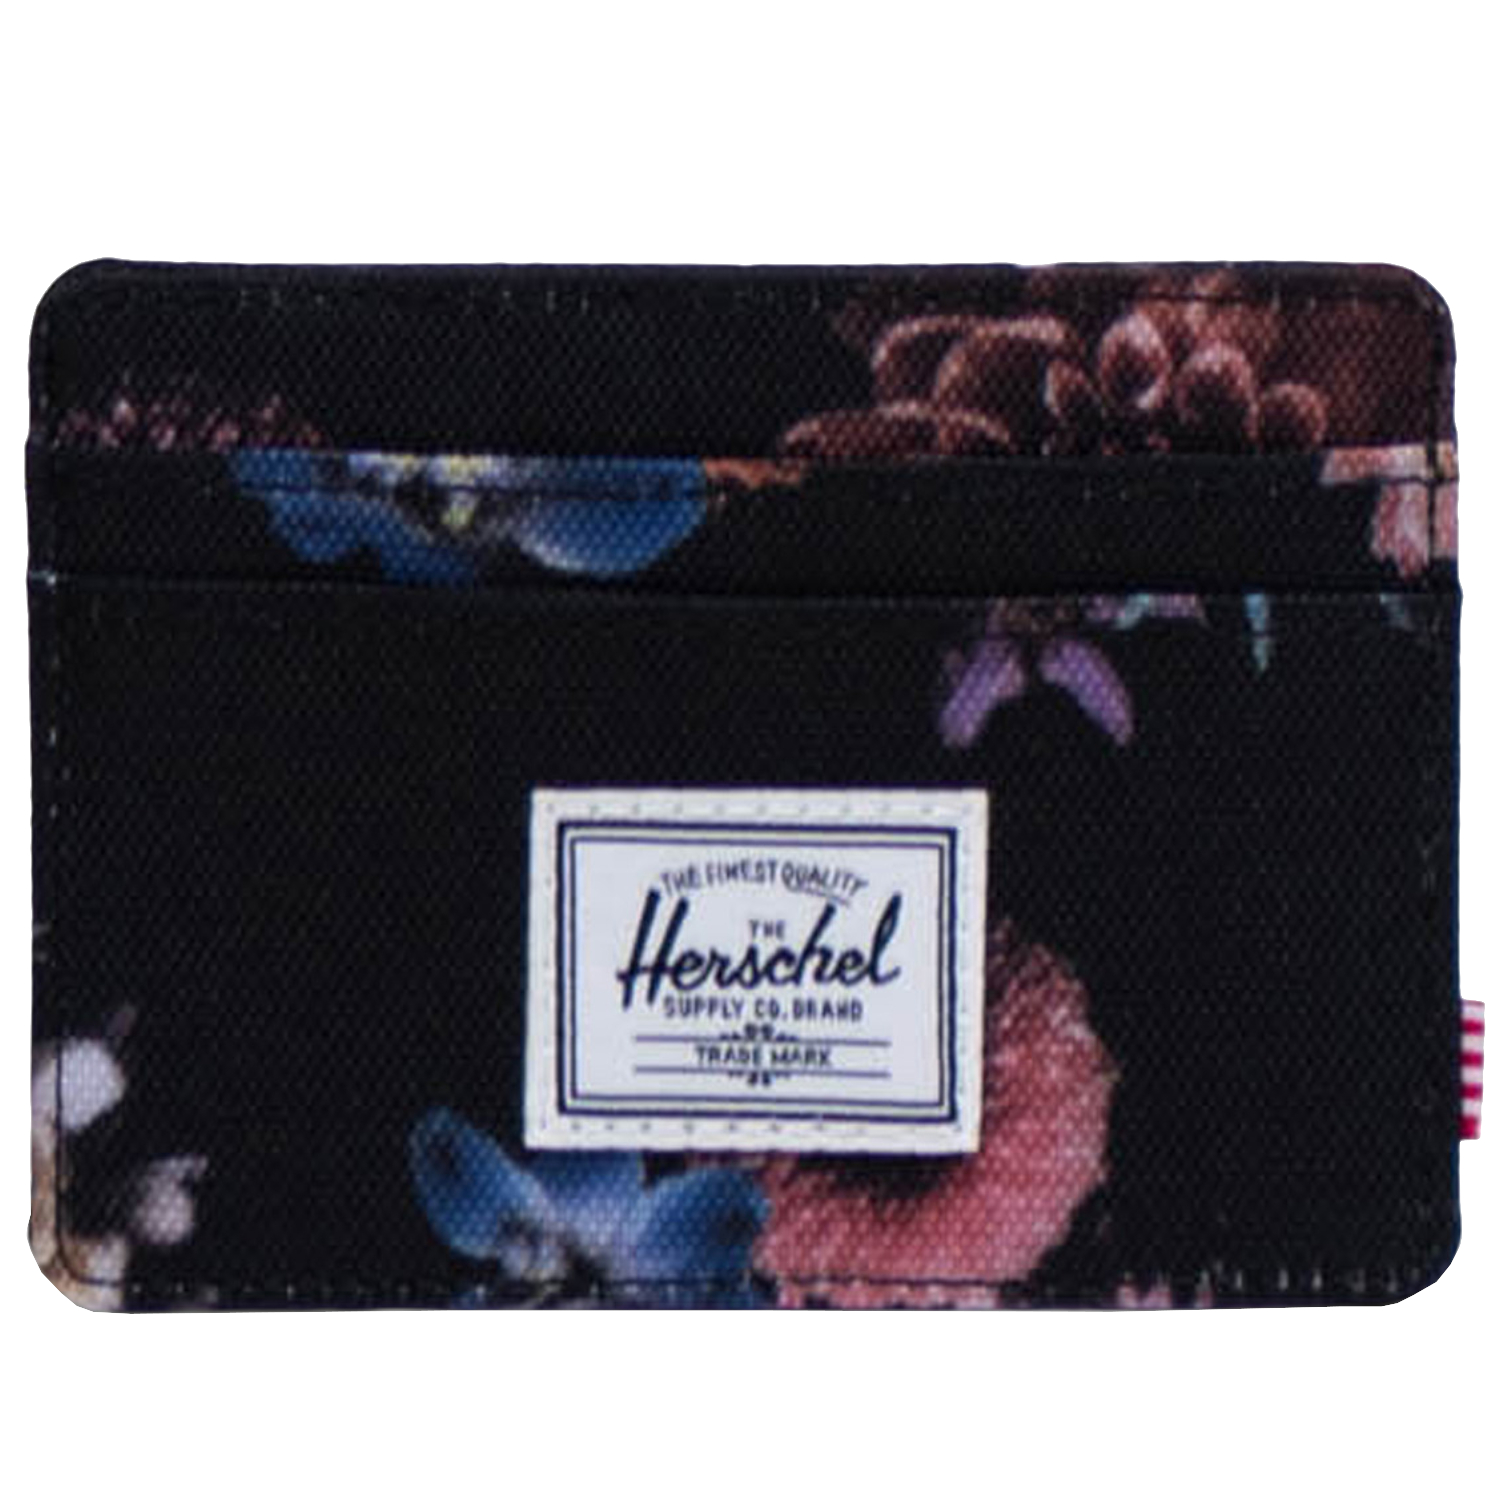 цена Кошелек Herschel Herschel Cardholder Wallet, разноцветный